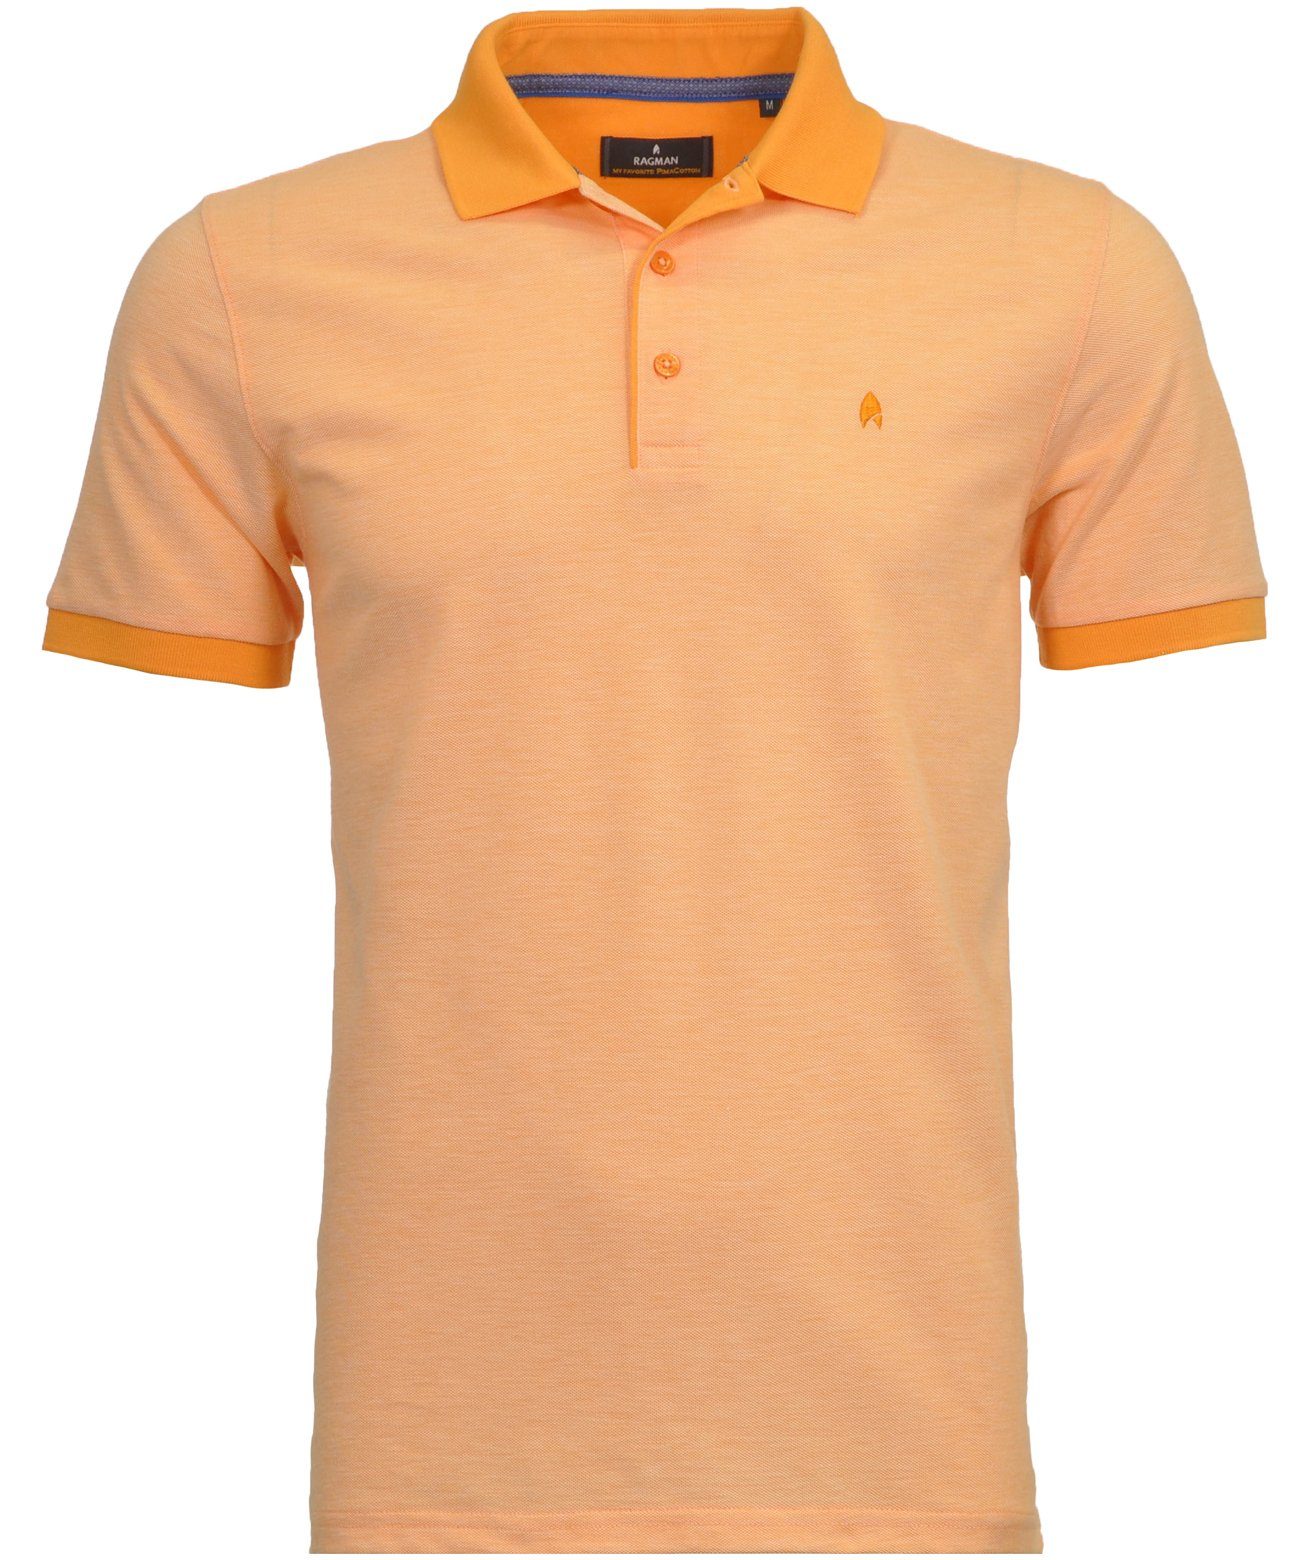 RAGMAN Poloshirt Orange-554 | Poloshirts